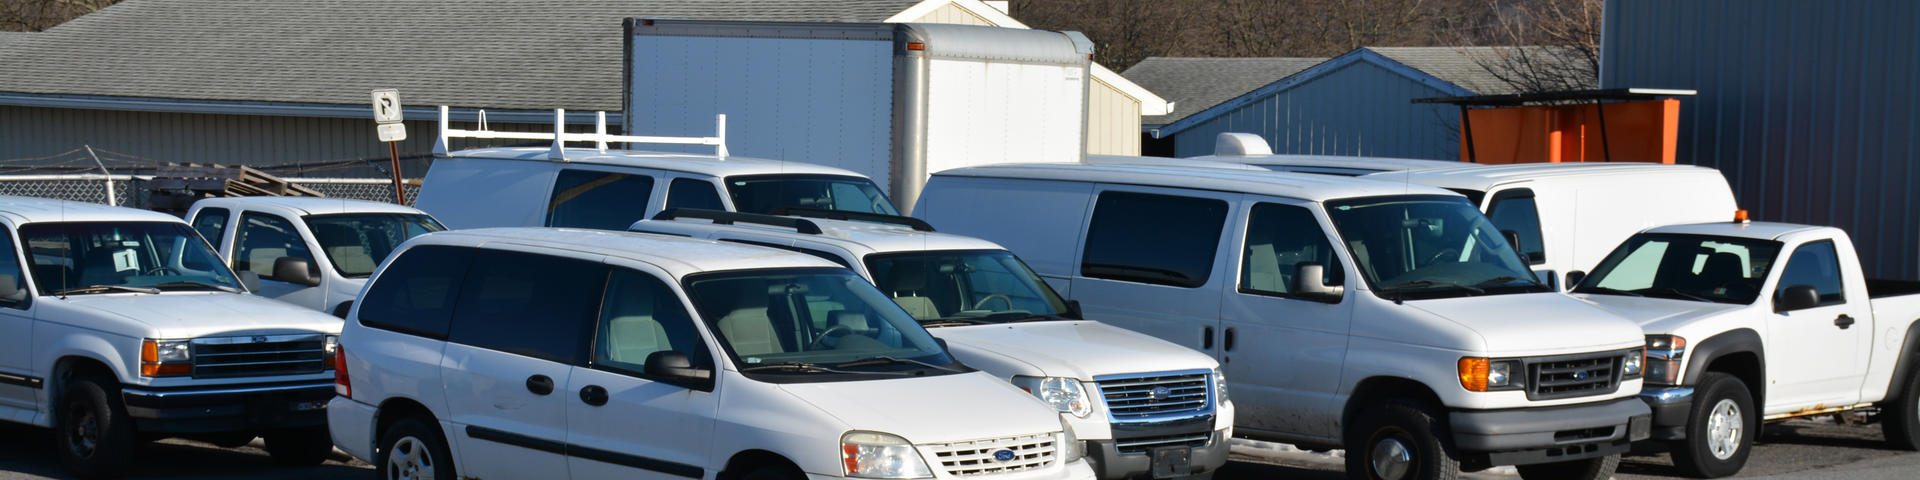 Nine white vehicles for auction at Lion Surplus